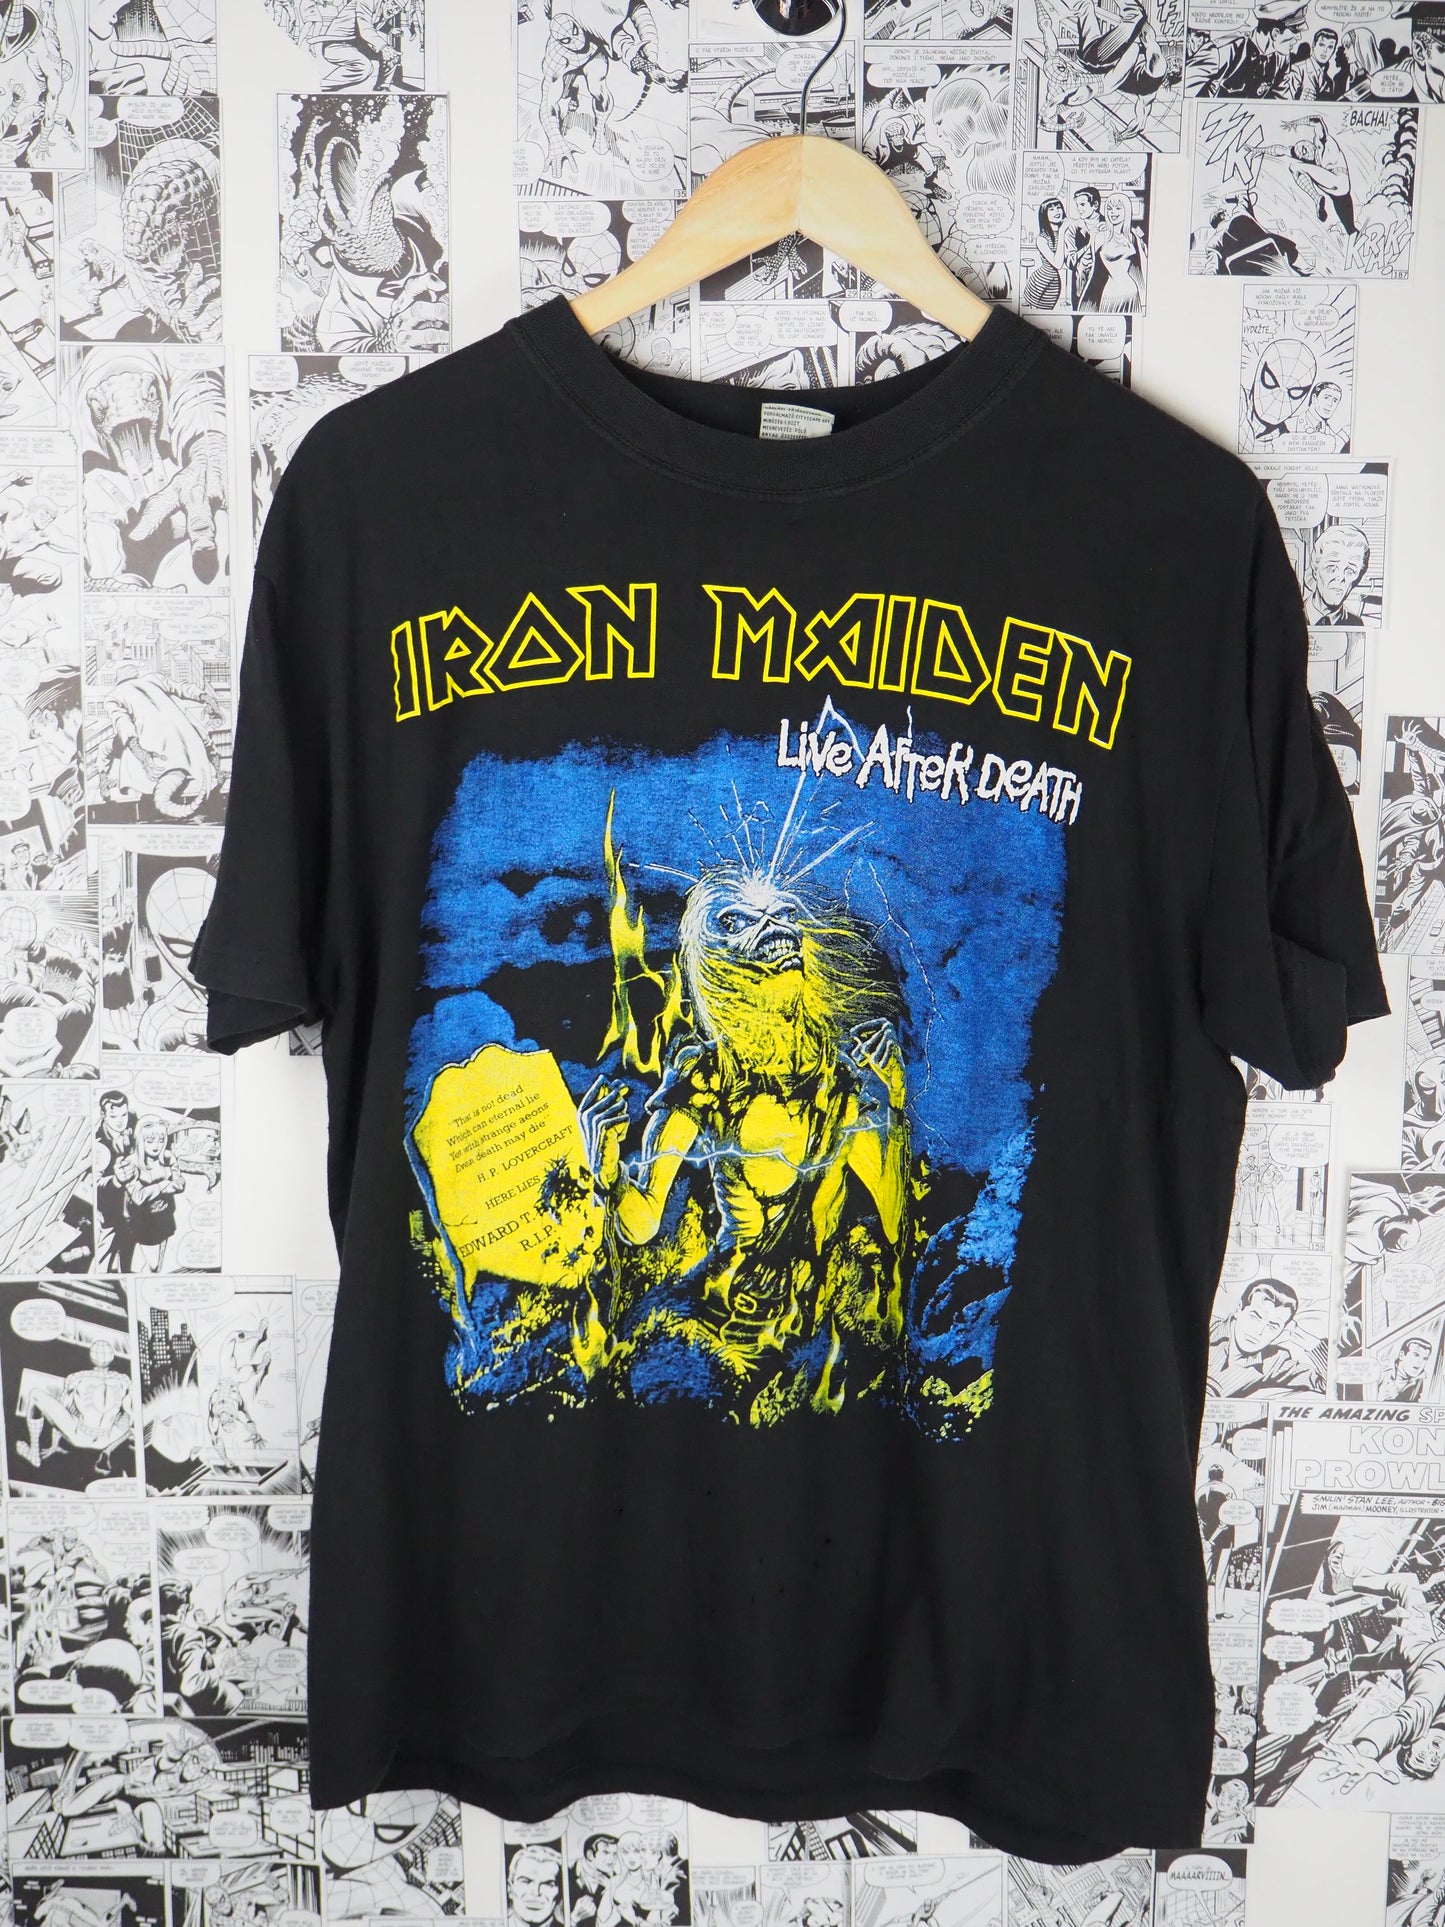 Vintage Iron Maiden "Live After Death" 90s t-shirt - size XL